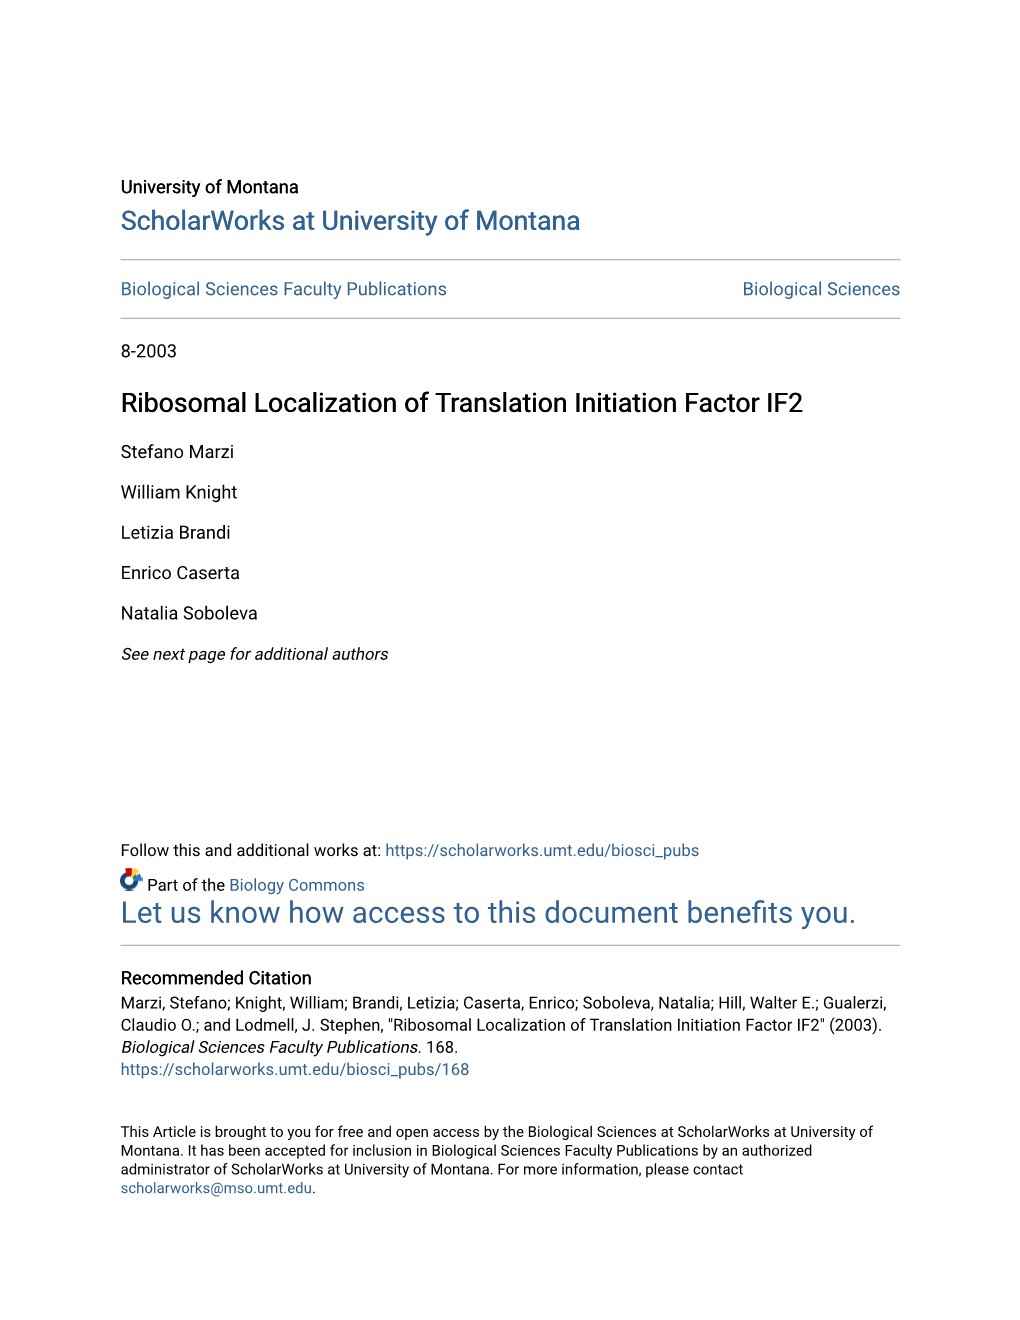 Ribosomal Localization of Translation Initiation Factor IF2